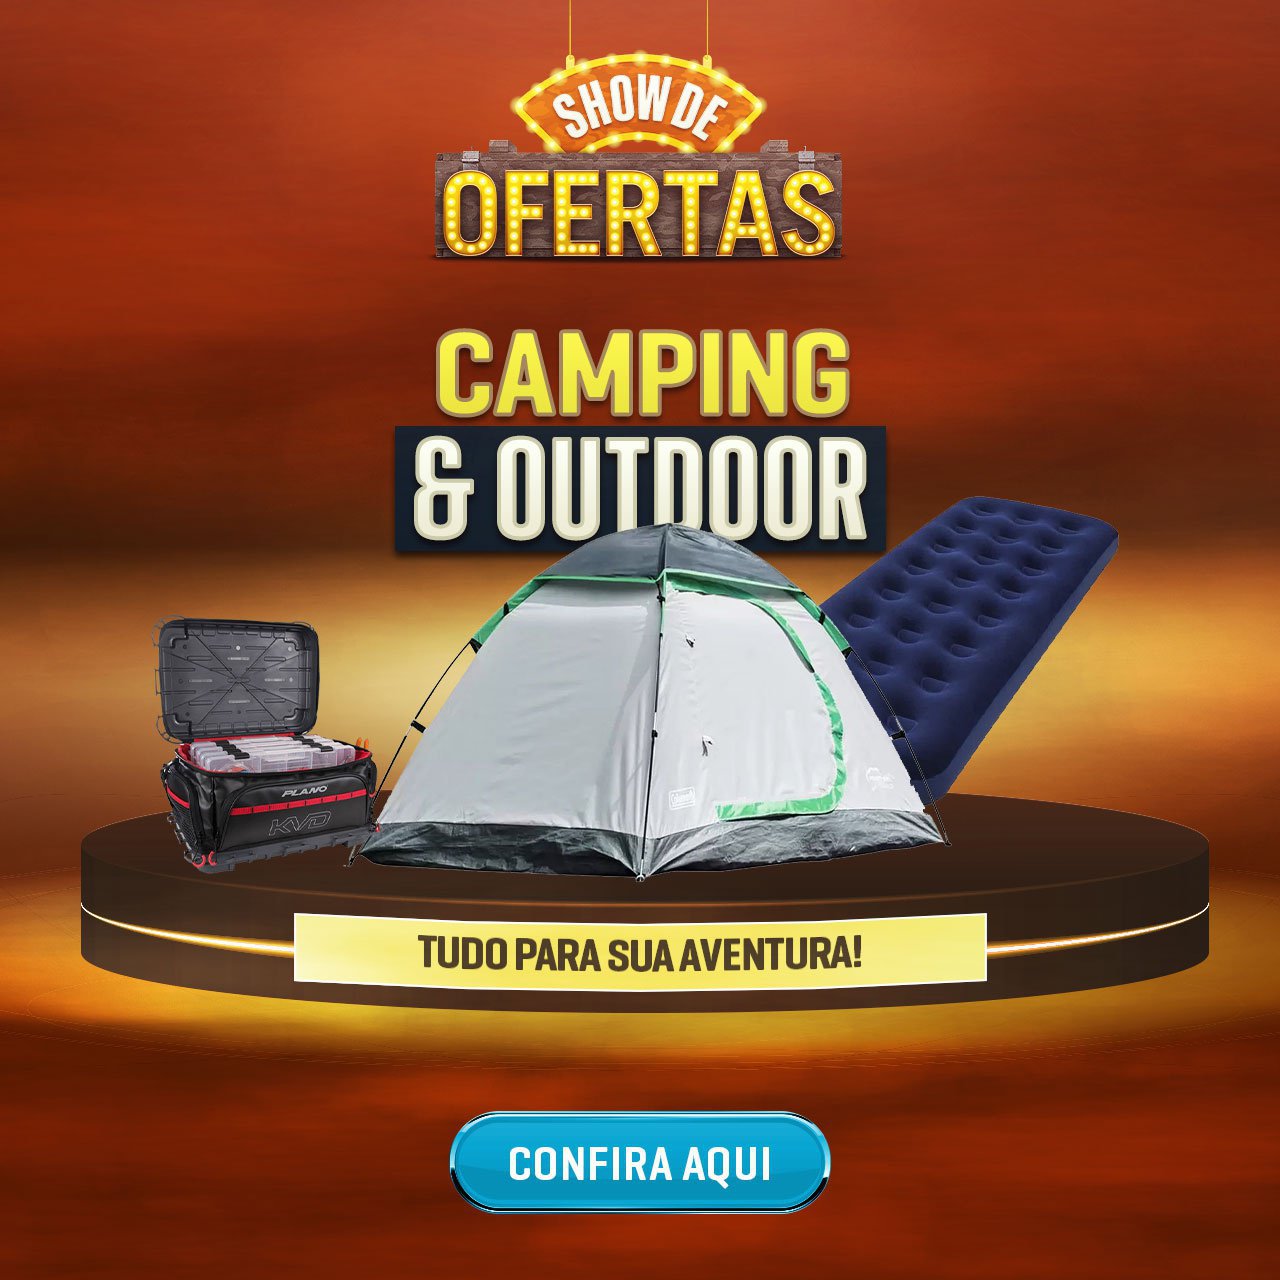 Camping & Outdoor - TUDO PARA SUA AVENTURA!